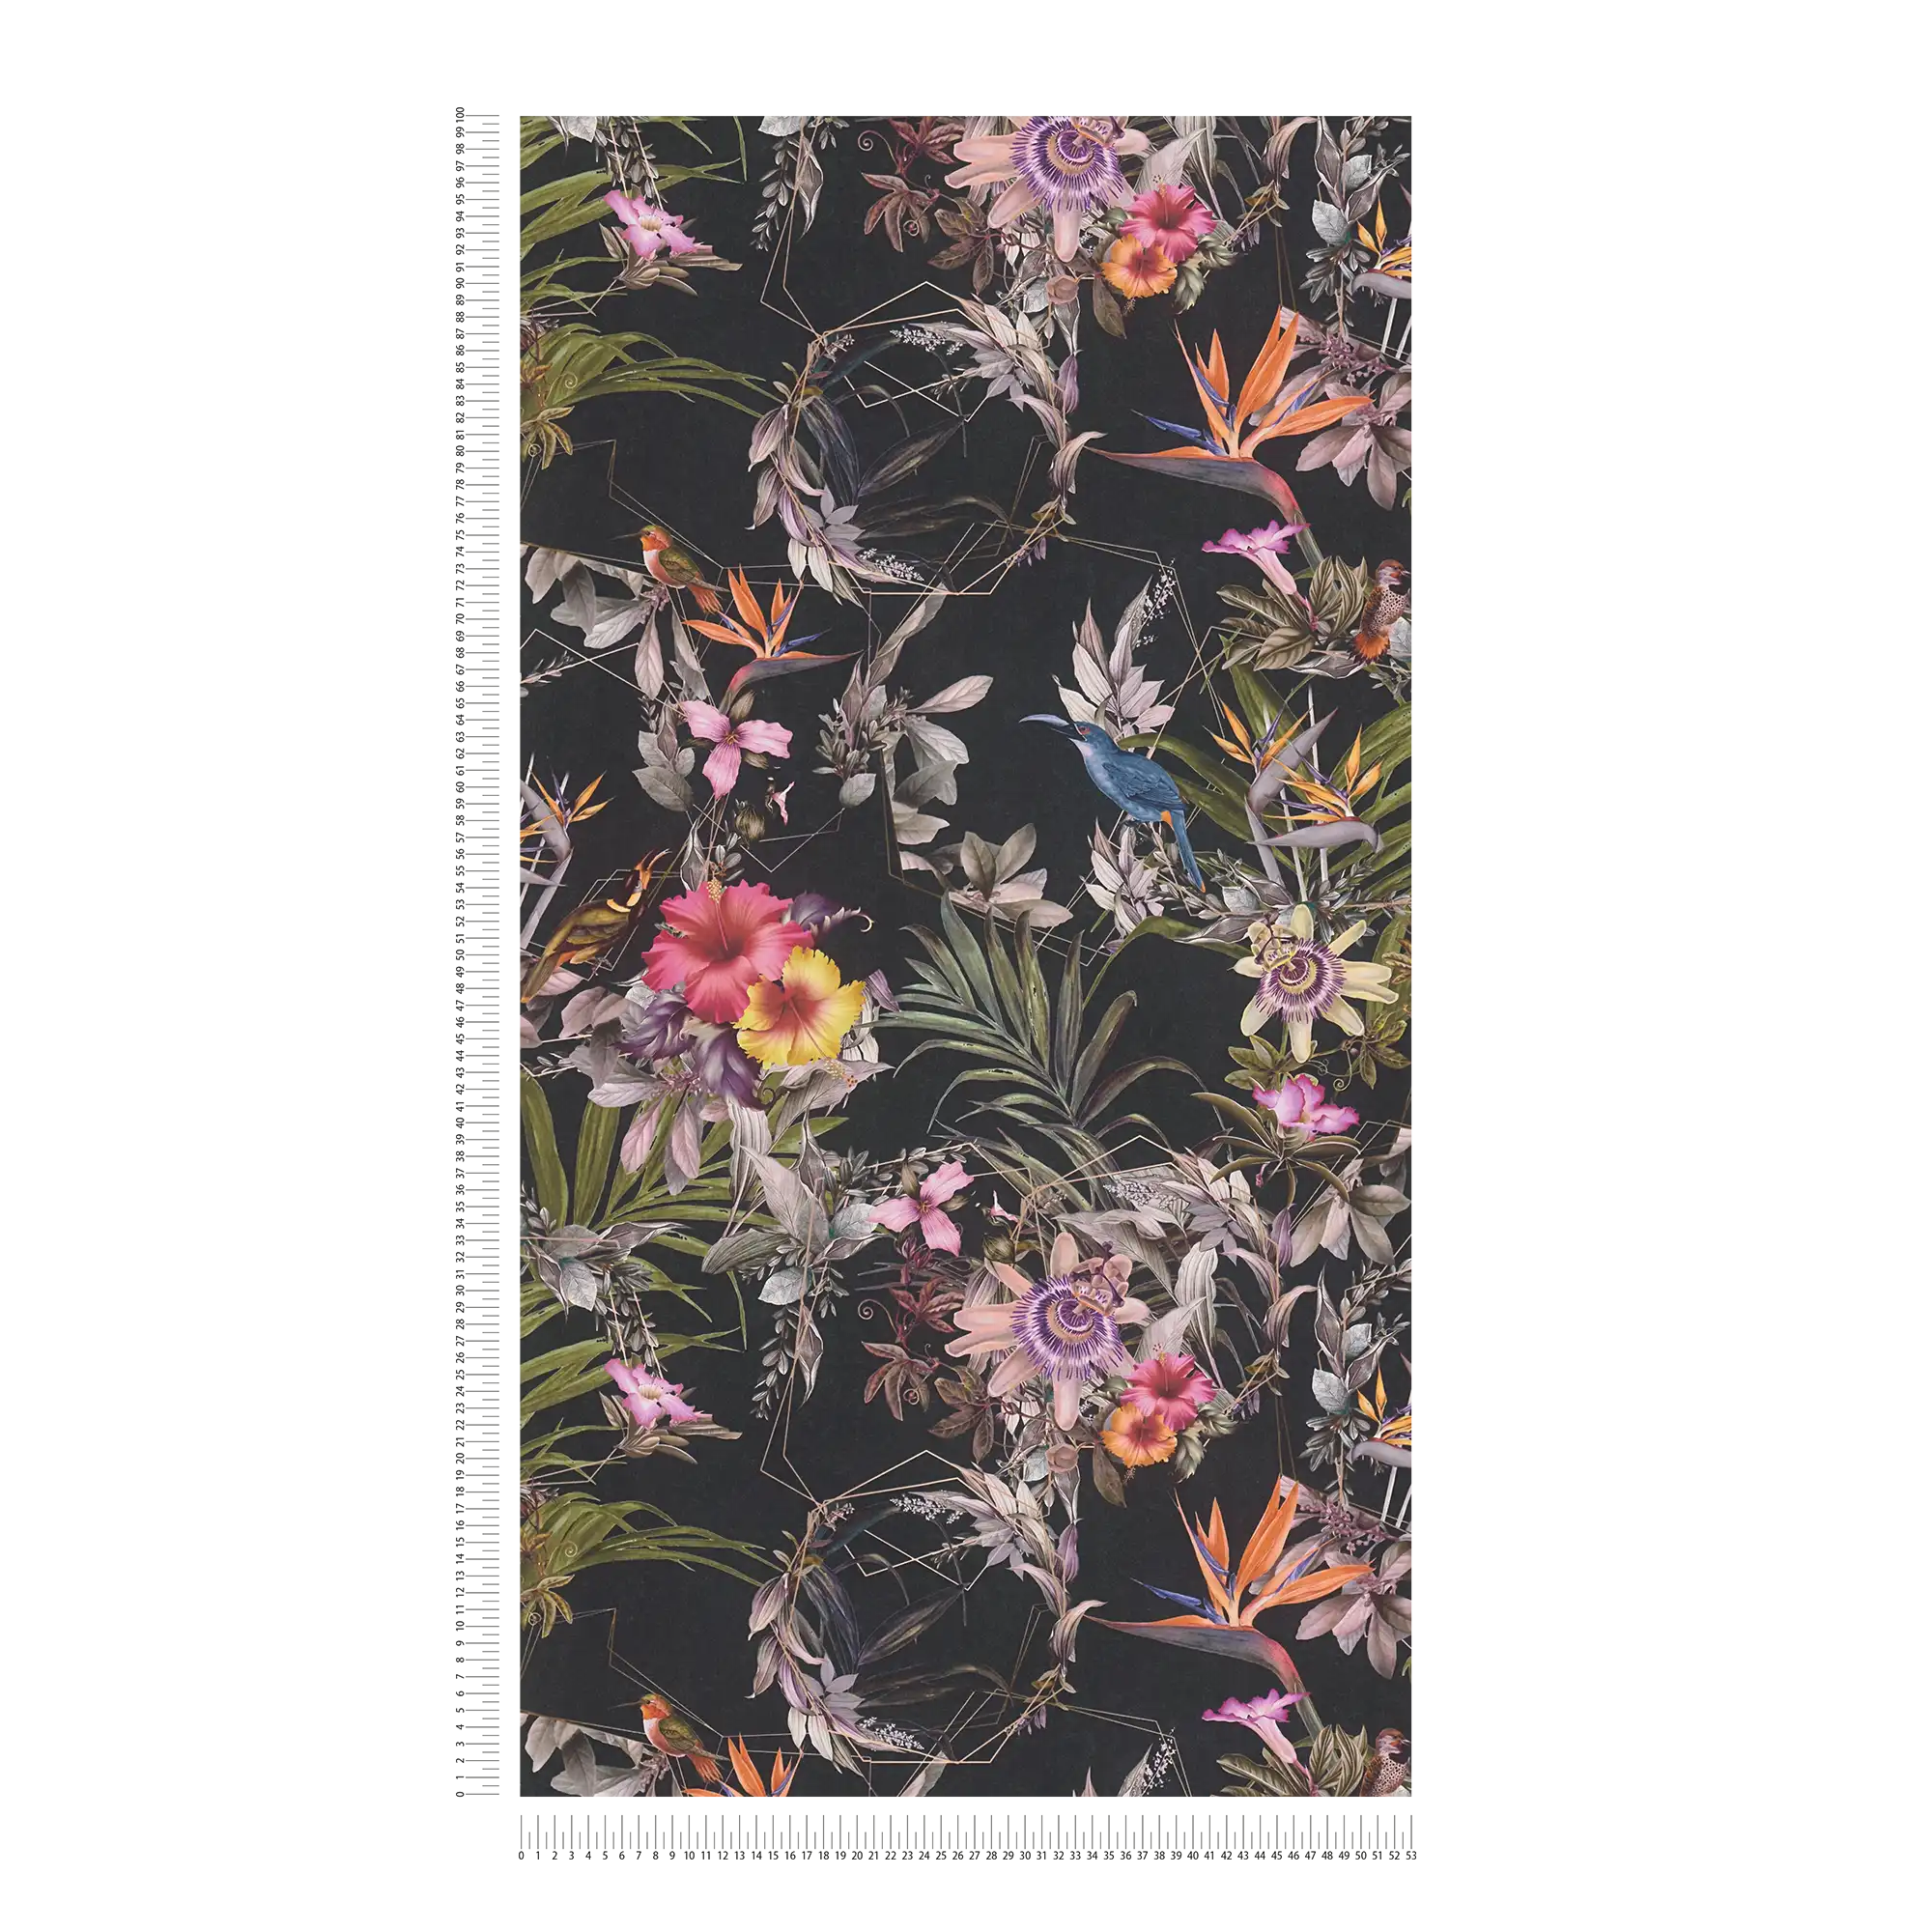             Papel pintado floral oscuro Hibiscus & Leaves - Colorido, Negro
        